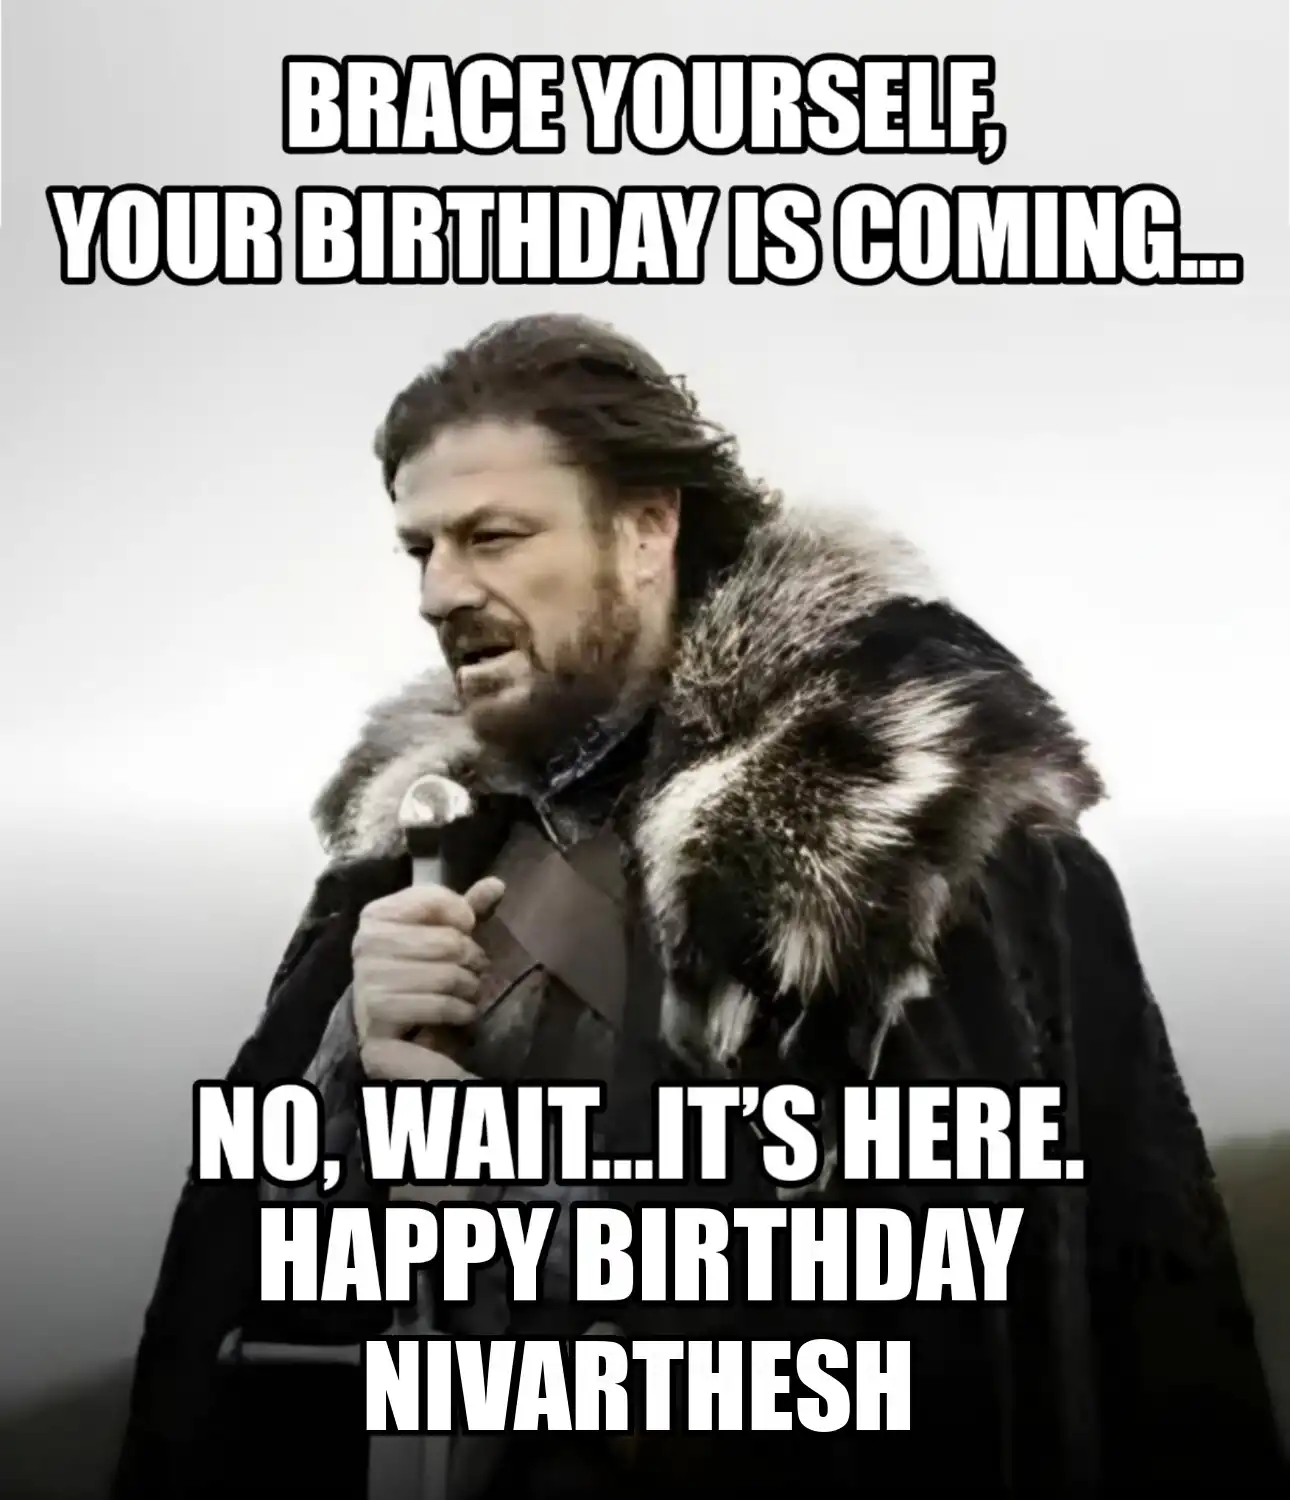 Happy Birthday Nivarthesh Brace Yourself Your Birthday Is Coming Meme